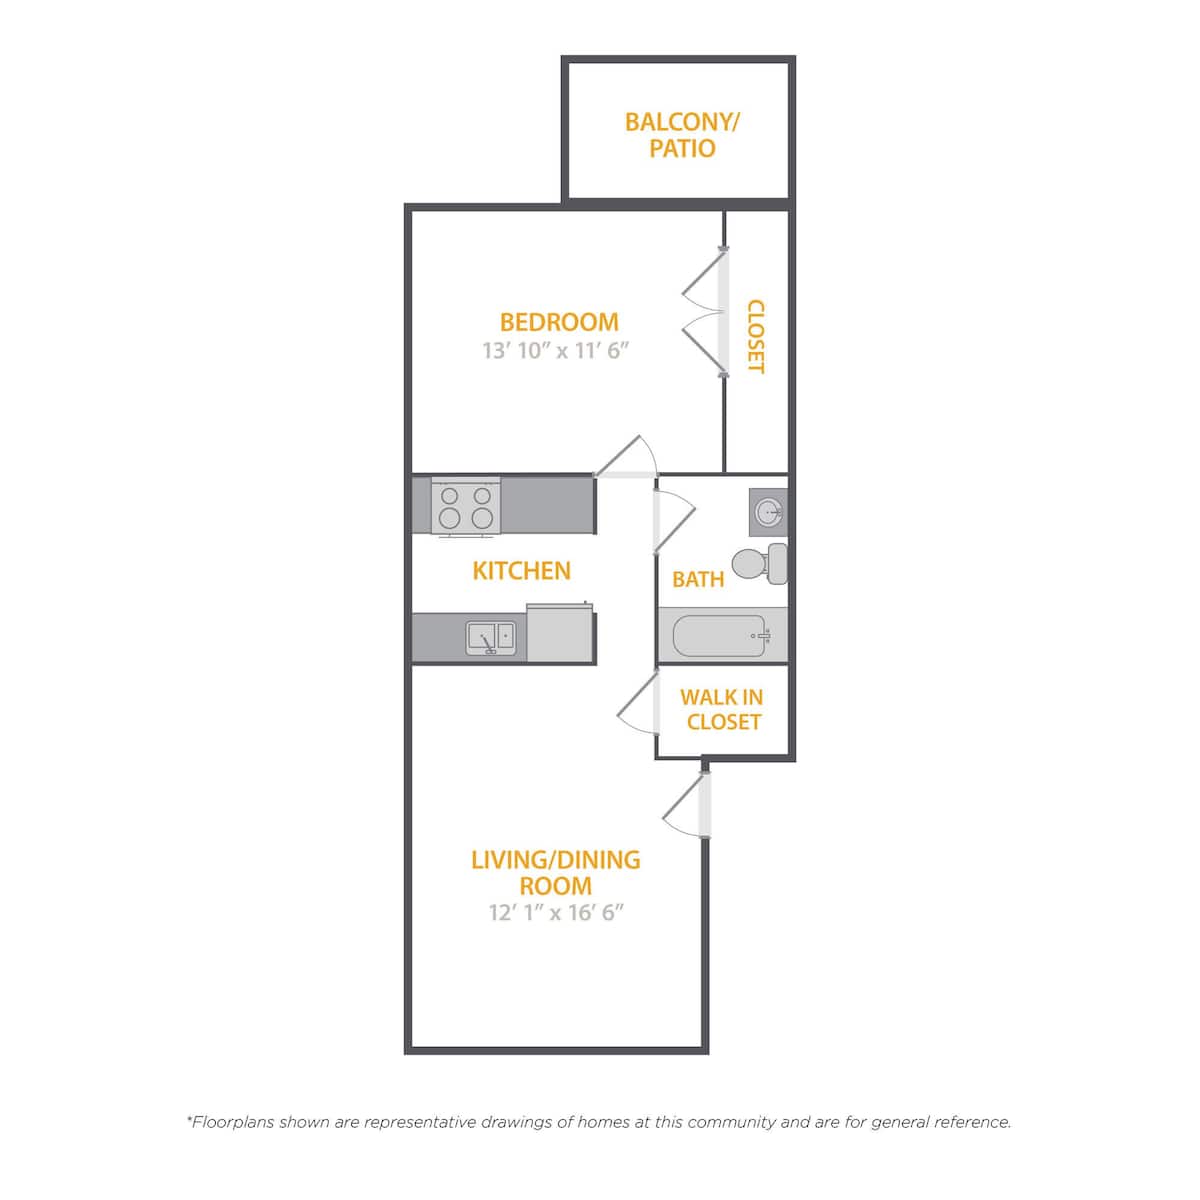 Floorplan diagram for Cove, showing 1 bedroom